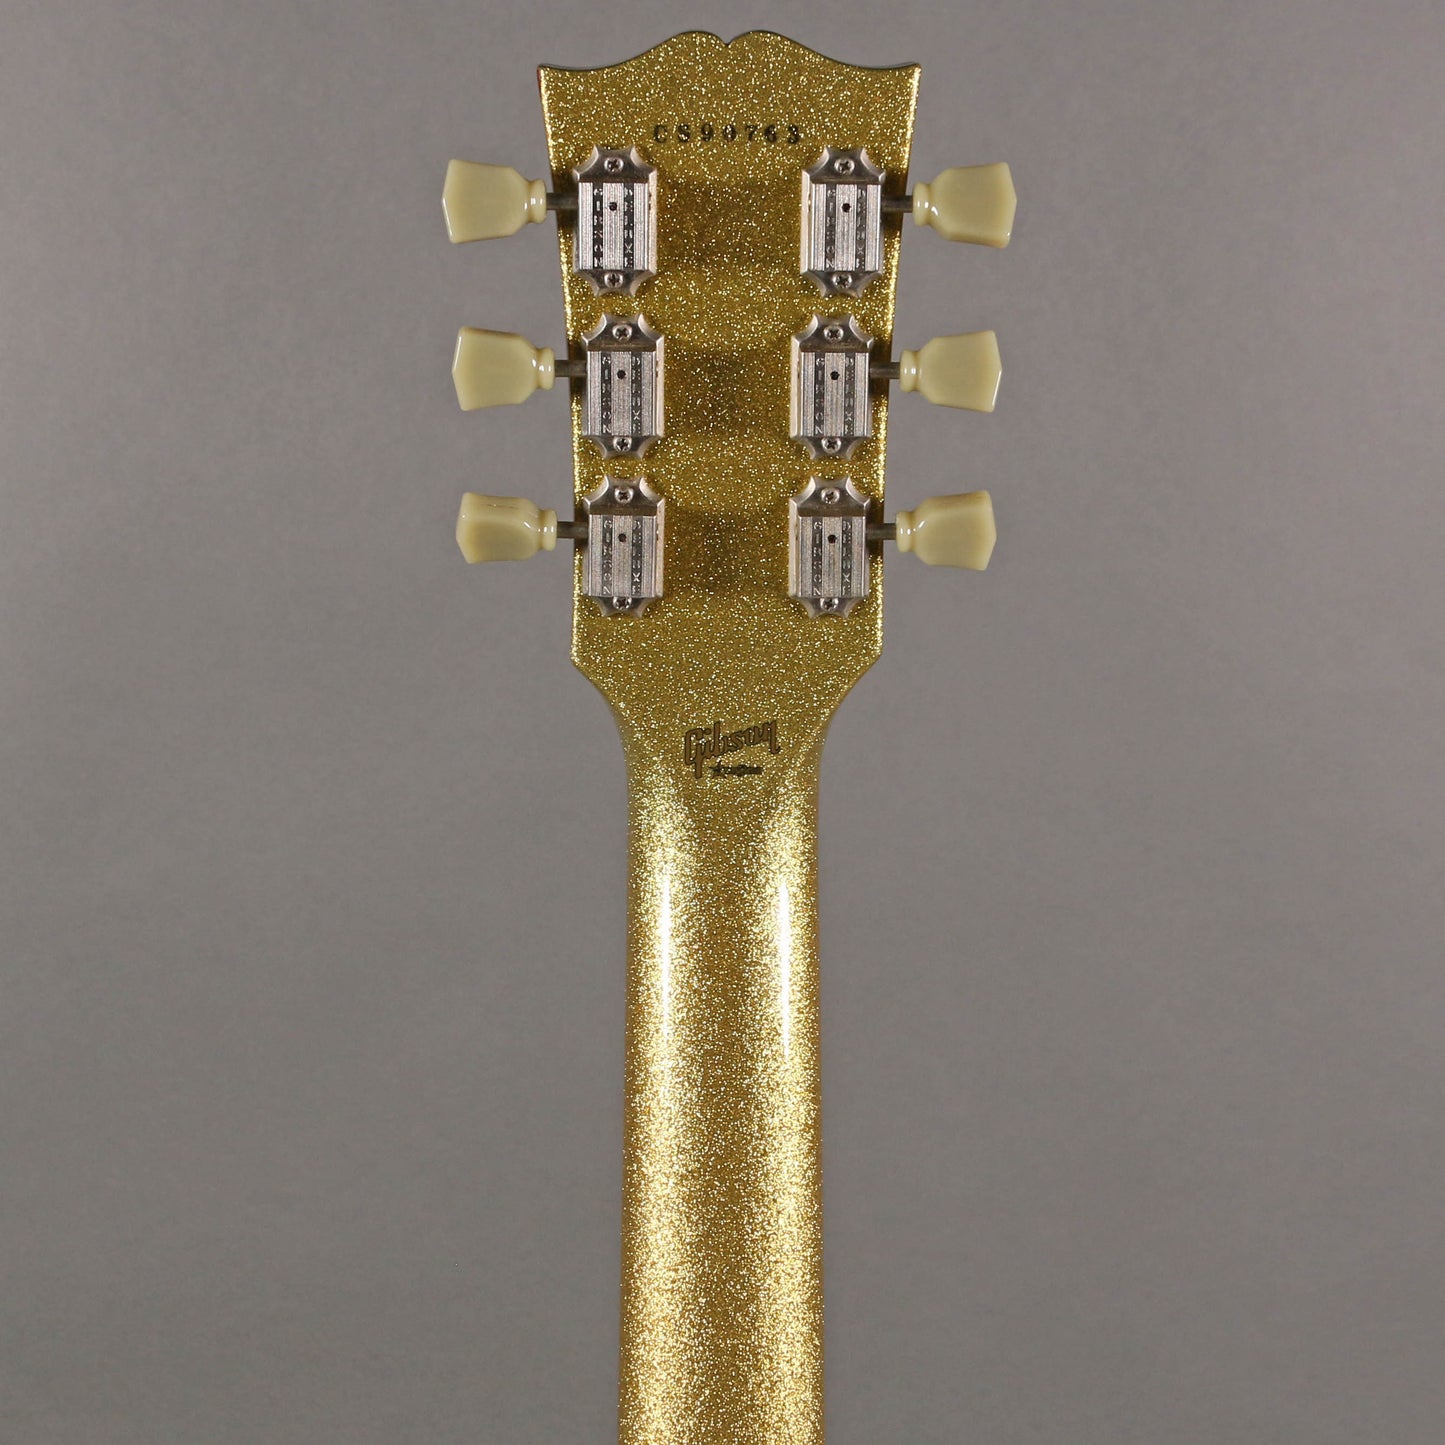 2006 Gibson Custom Shop Les Paul [*Bibi McGill of Beyoncé Collection]